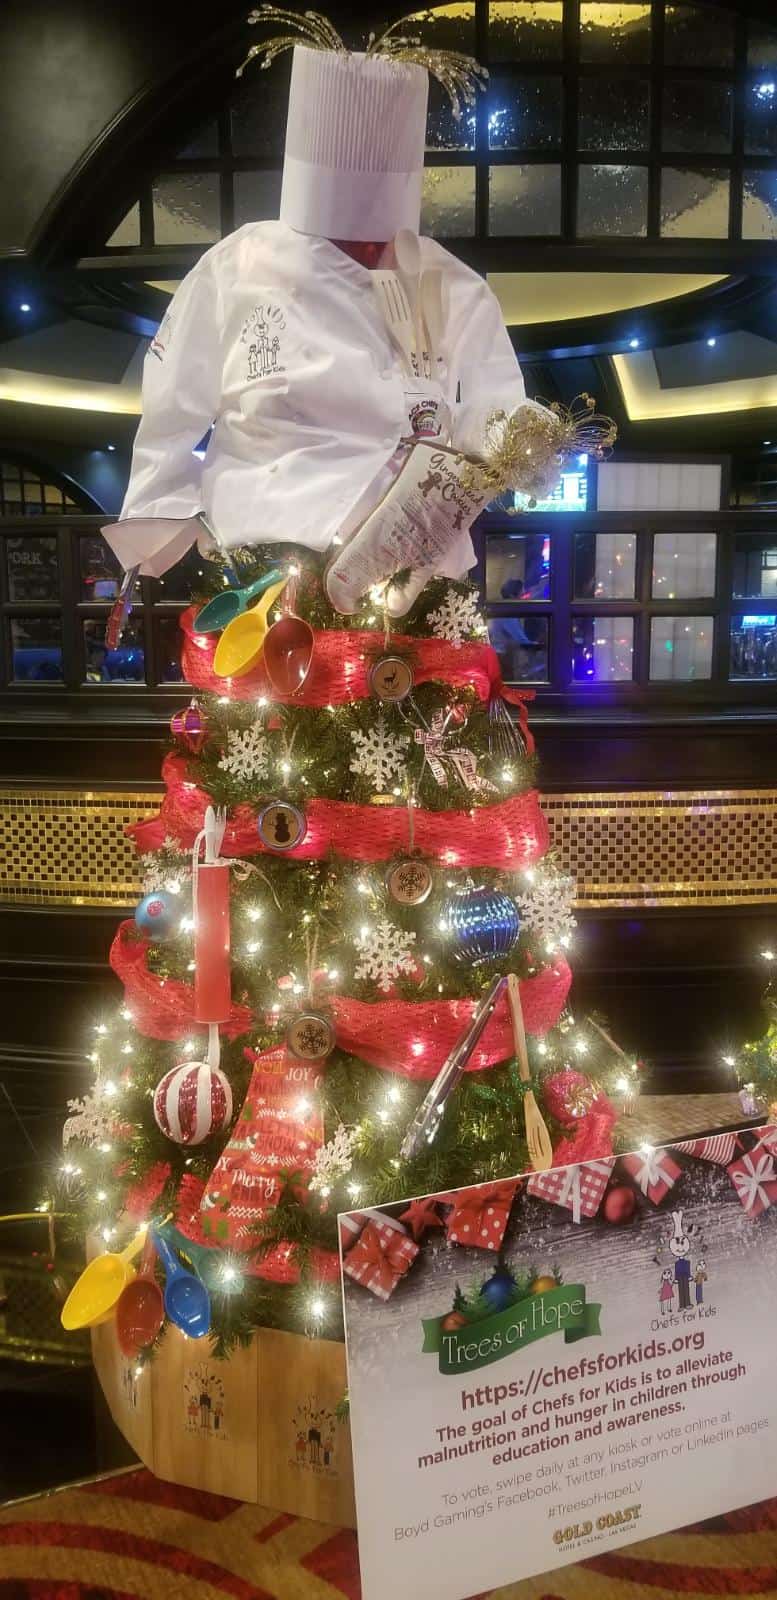 Chefs for Kids Christmas Tree